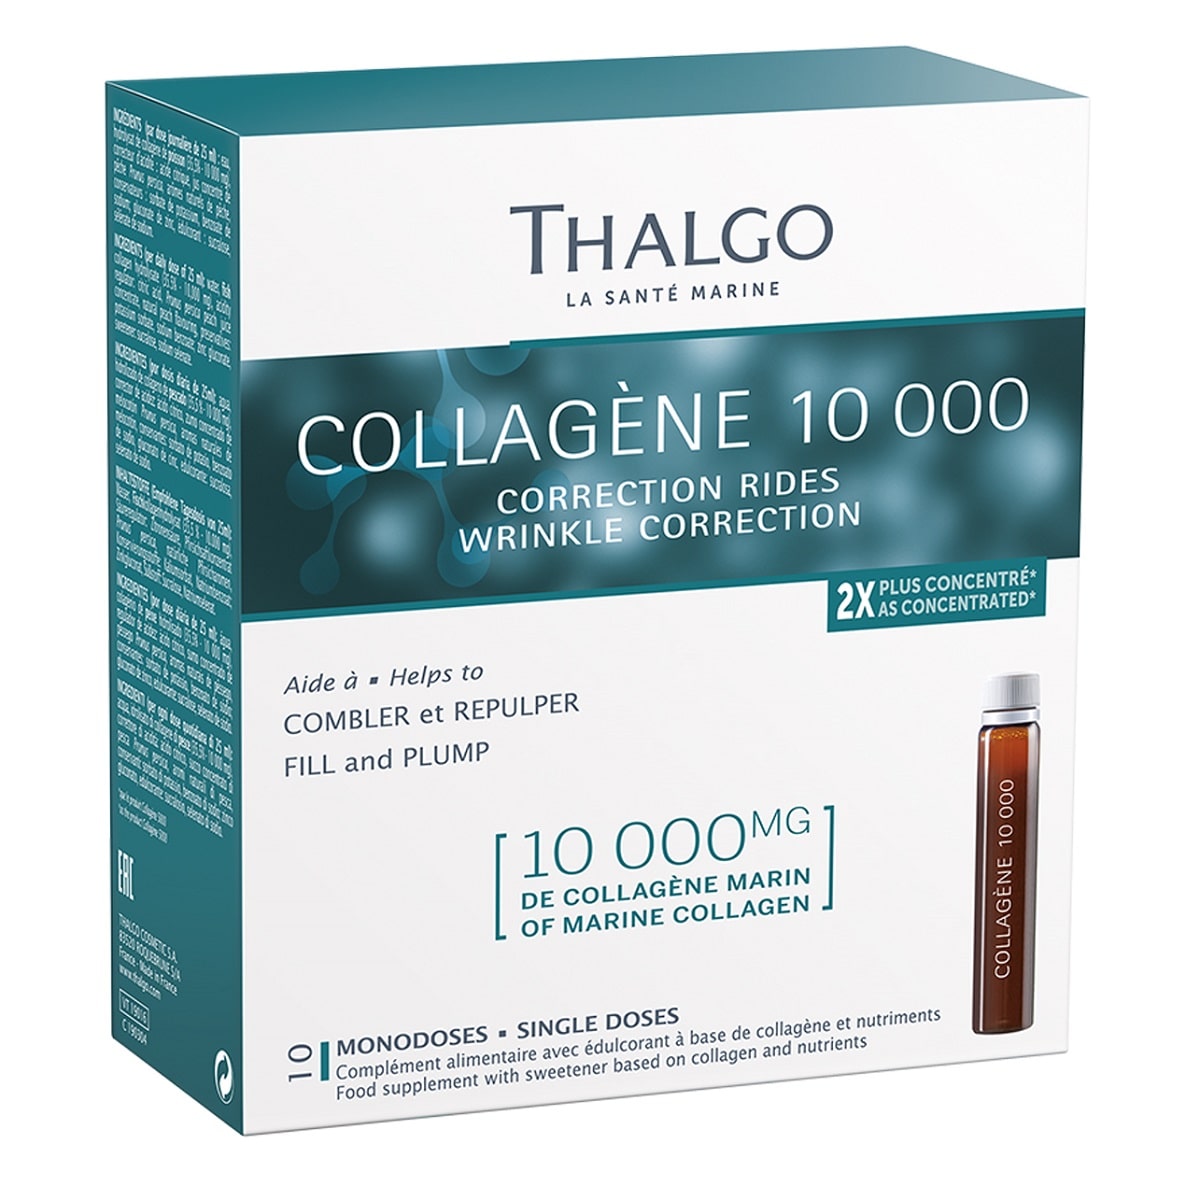 Тальго Биологически активная добавка для молодости и красоты Collagene 10 000, 10 ампул х 25 мл (Thalgo, Source Marine) фото 0